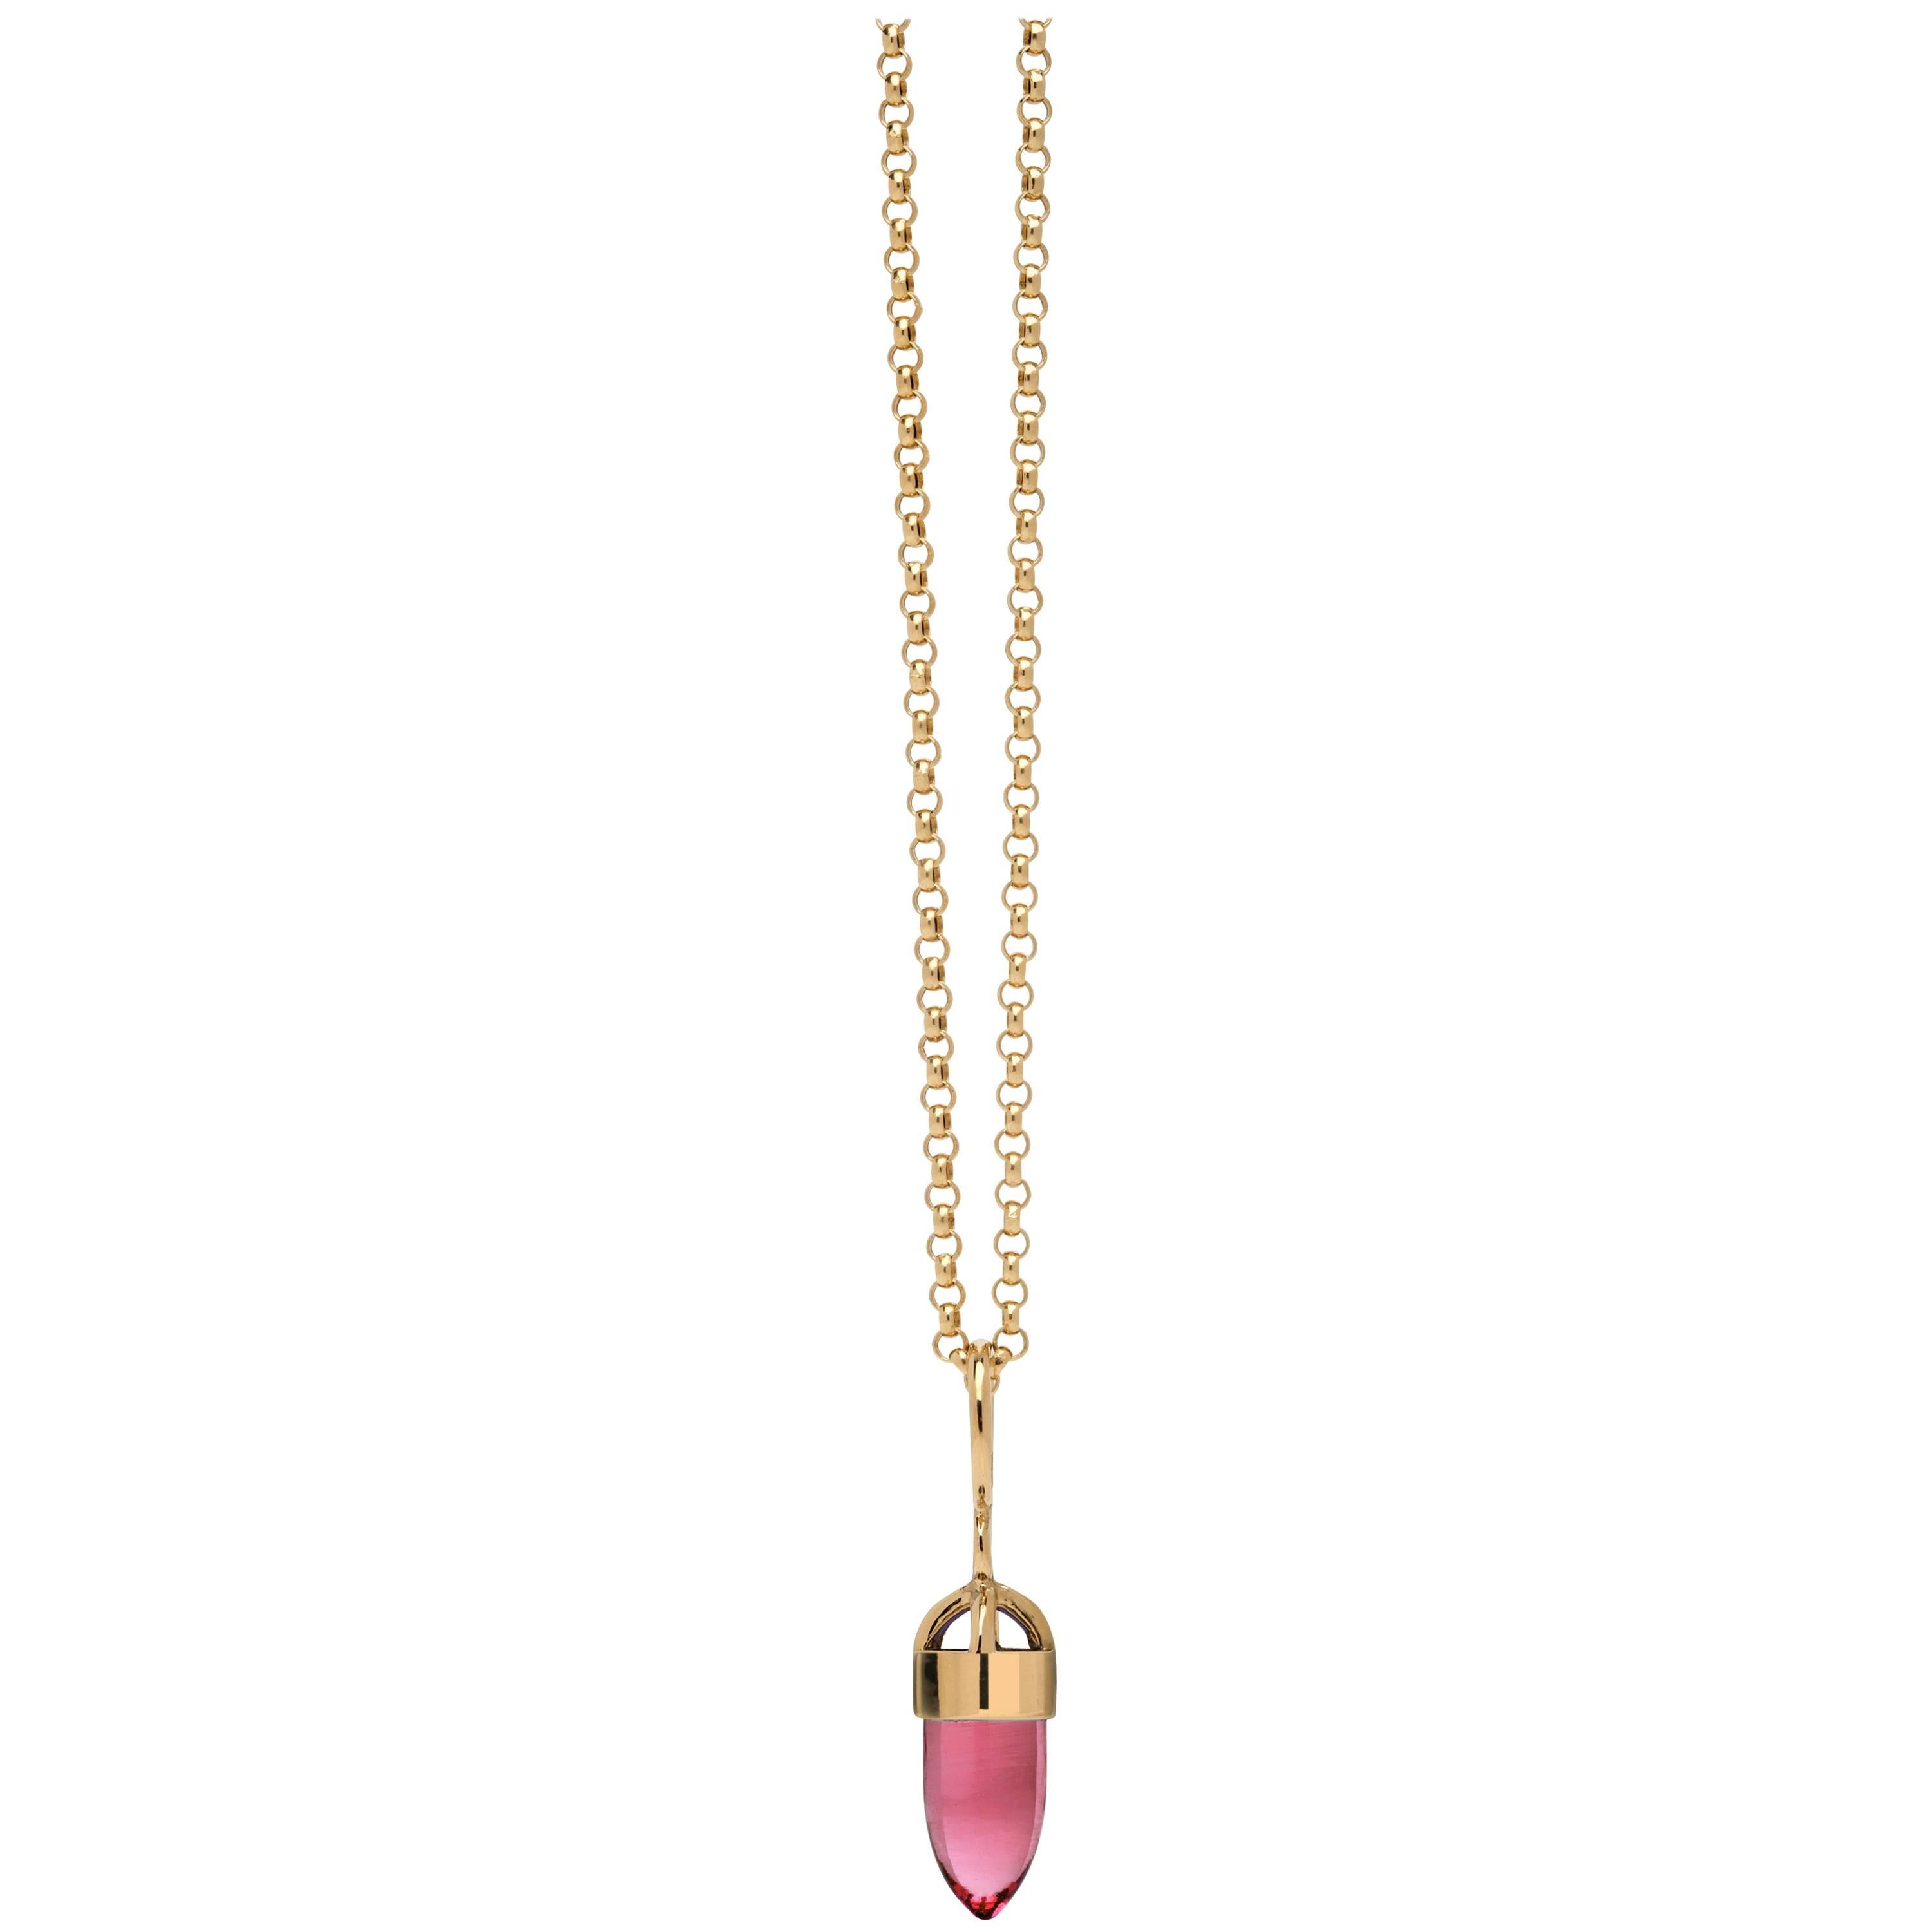 MAVIADA's Modern Minimalist Pink Stone 18 Karat Yellow Gold Pendant Necklace